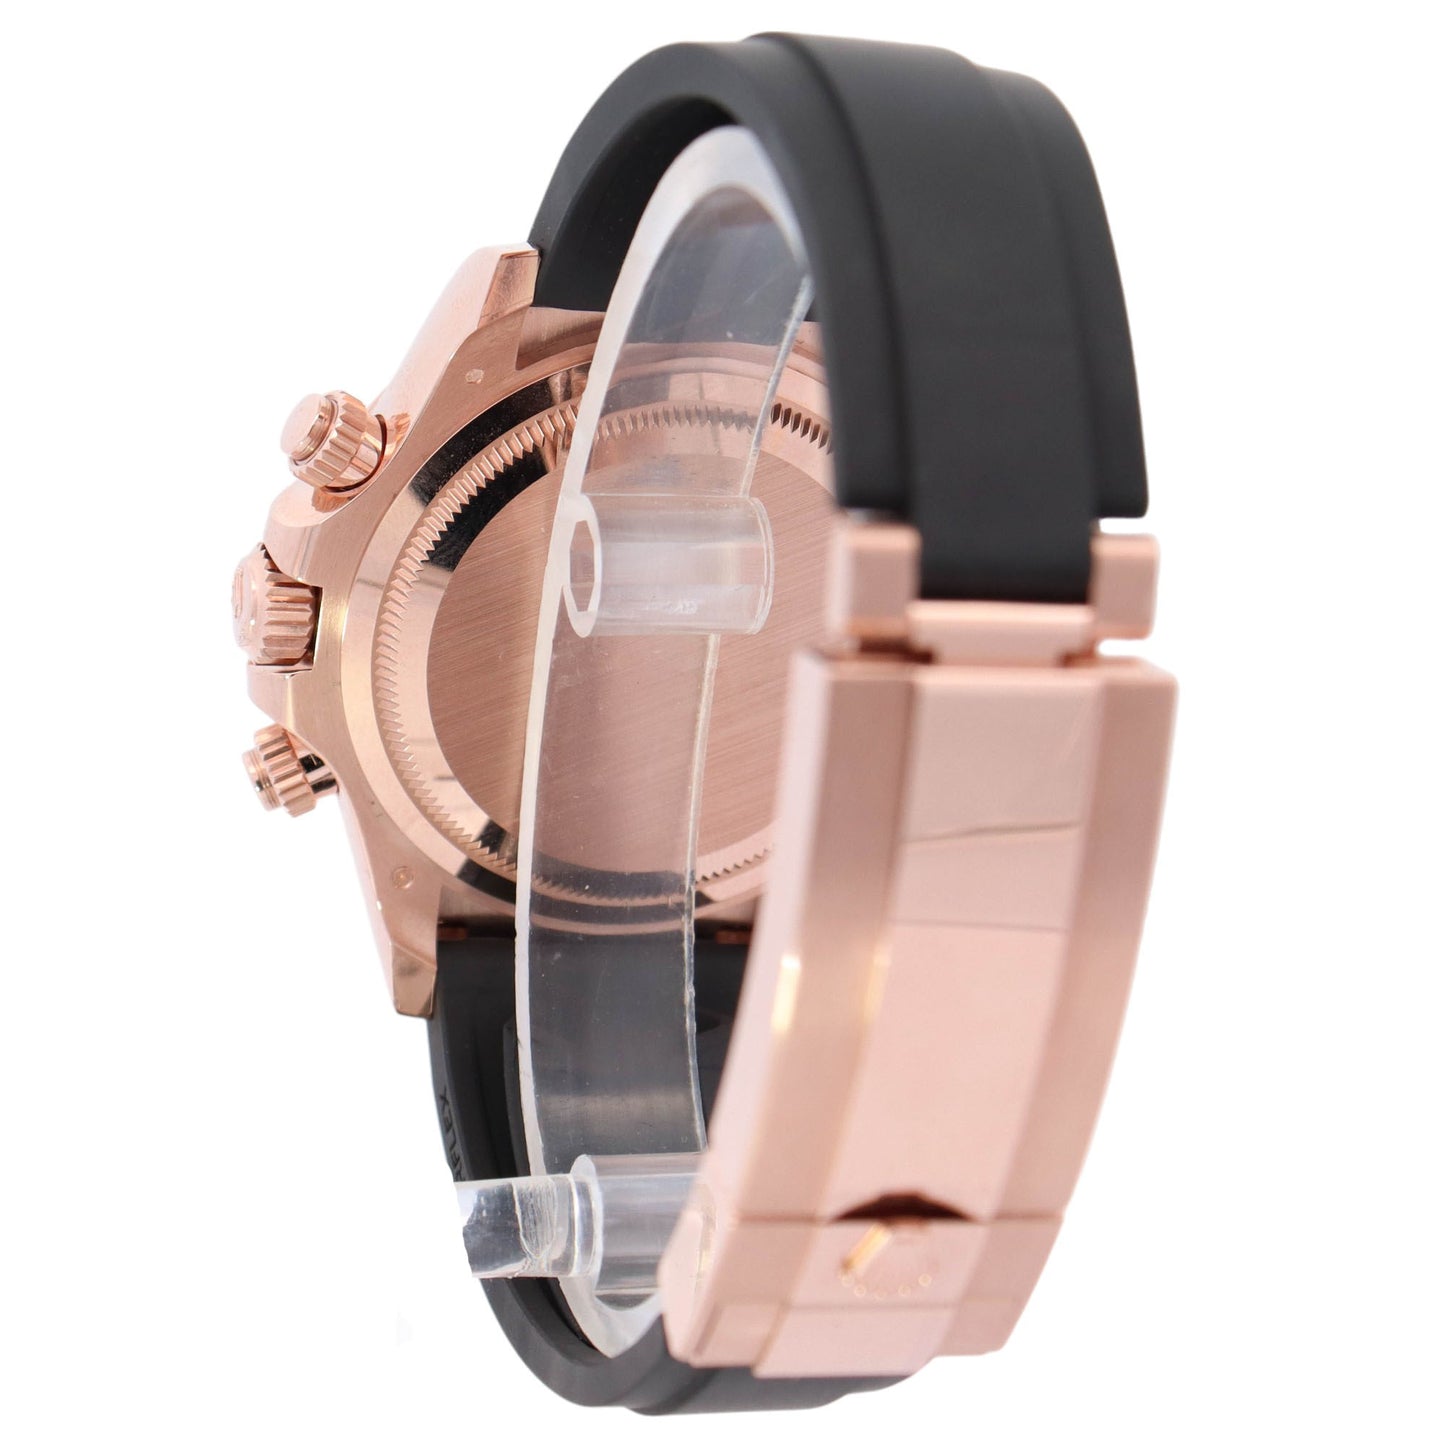 Rolex Daytona Rose Gold 40mm Black Chronograph Dial Watch Reference# 126515LN - Happy Jewelers Fine Jewelry Lifetime Warranty